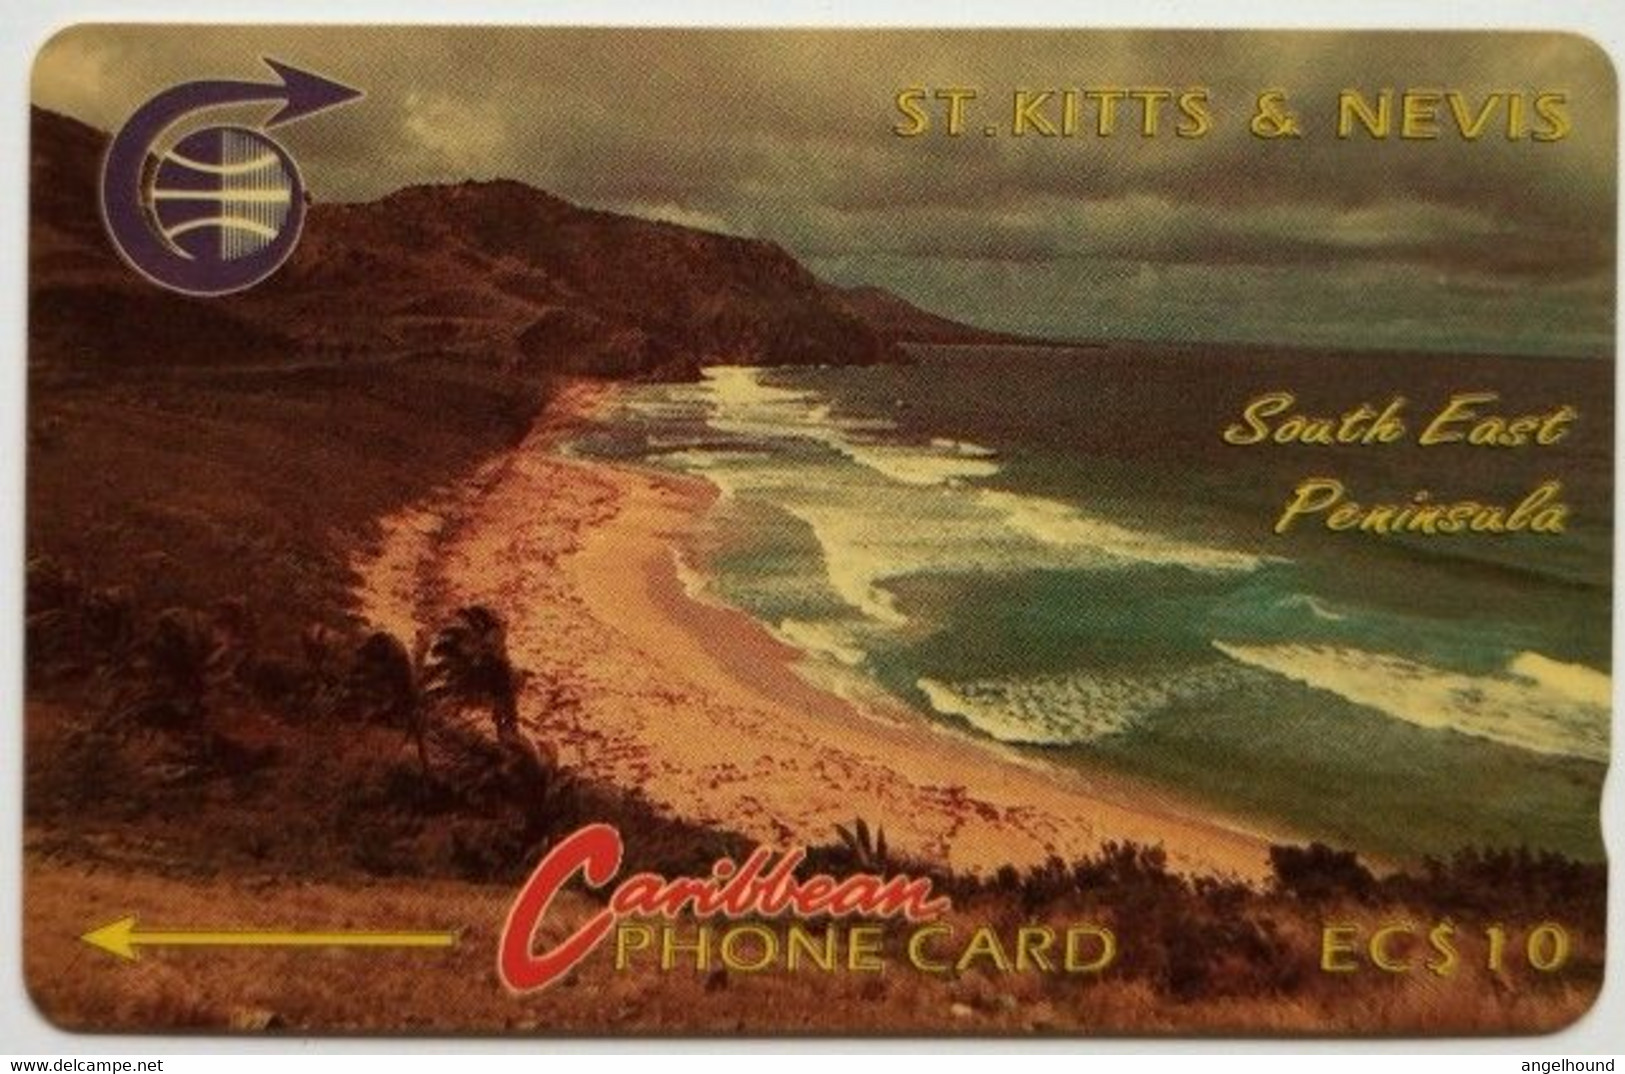 St. Kitts And Nevis  EC$10  3CSK  ( Error ) " South East Peninsula " - St. Kitts & Nevis